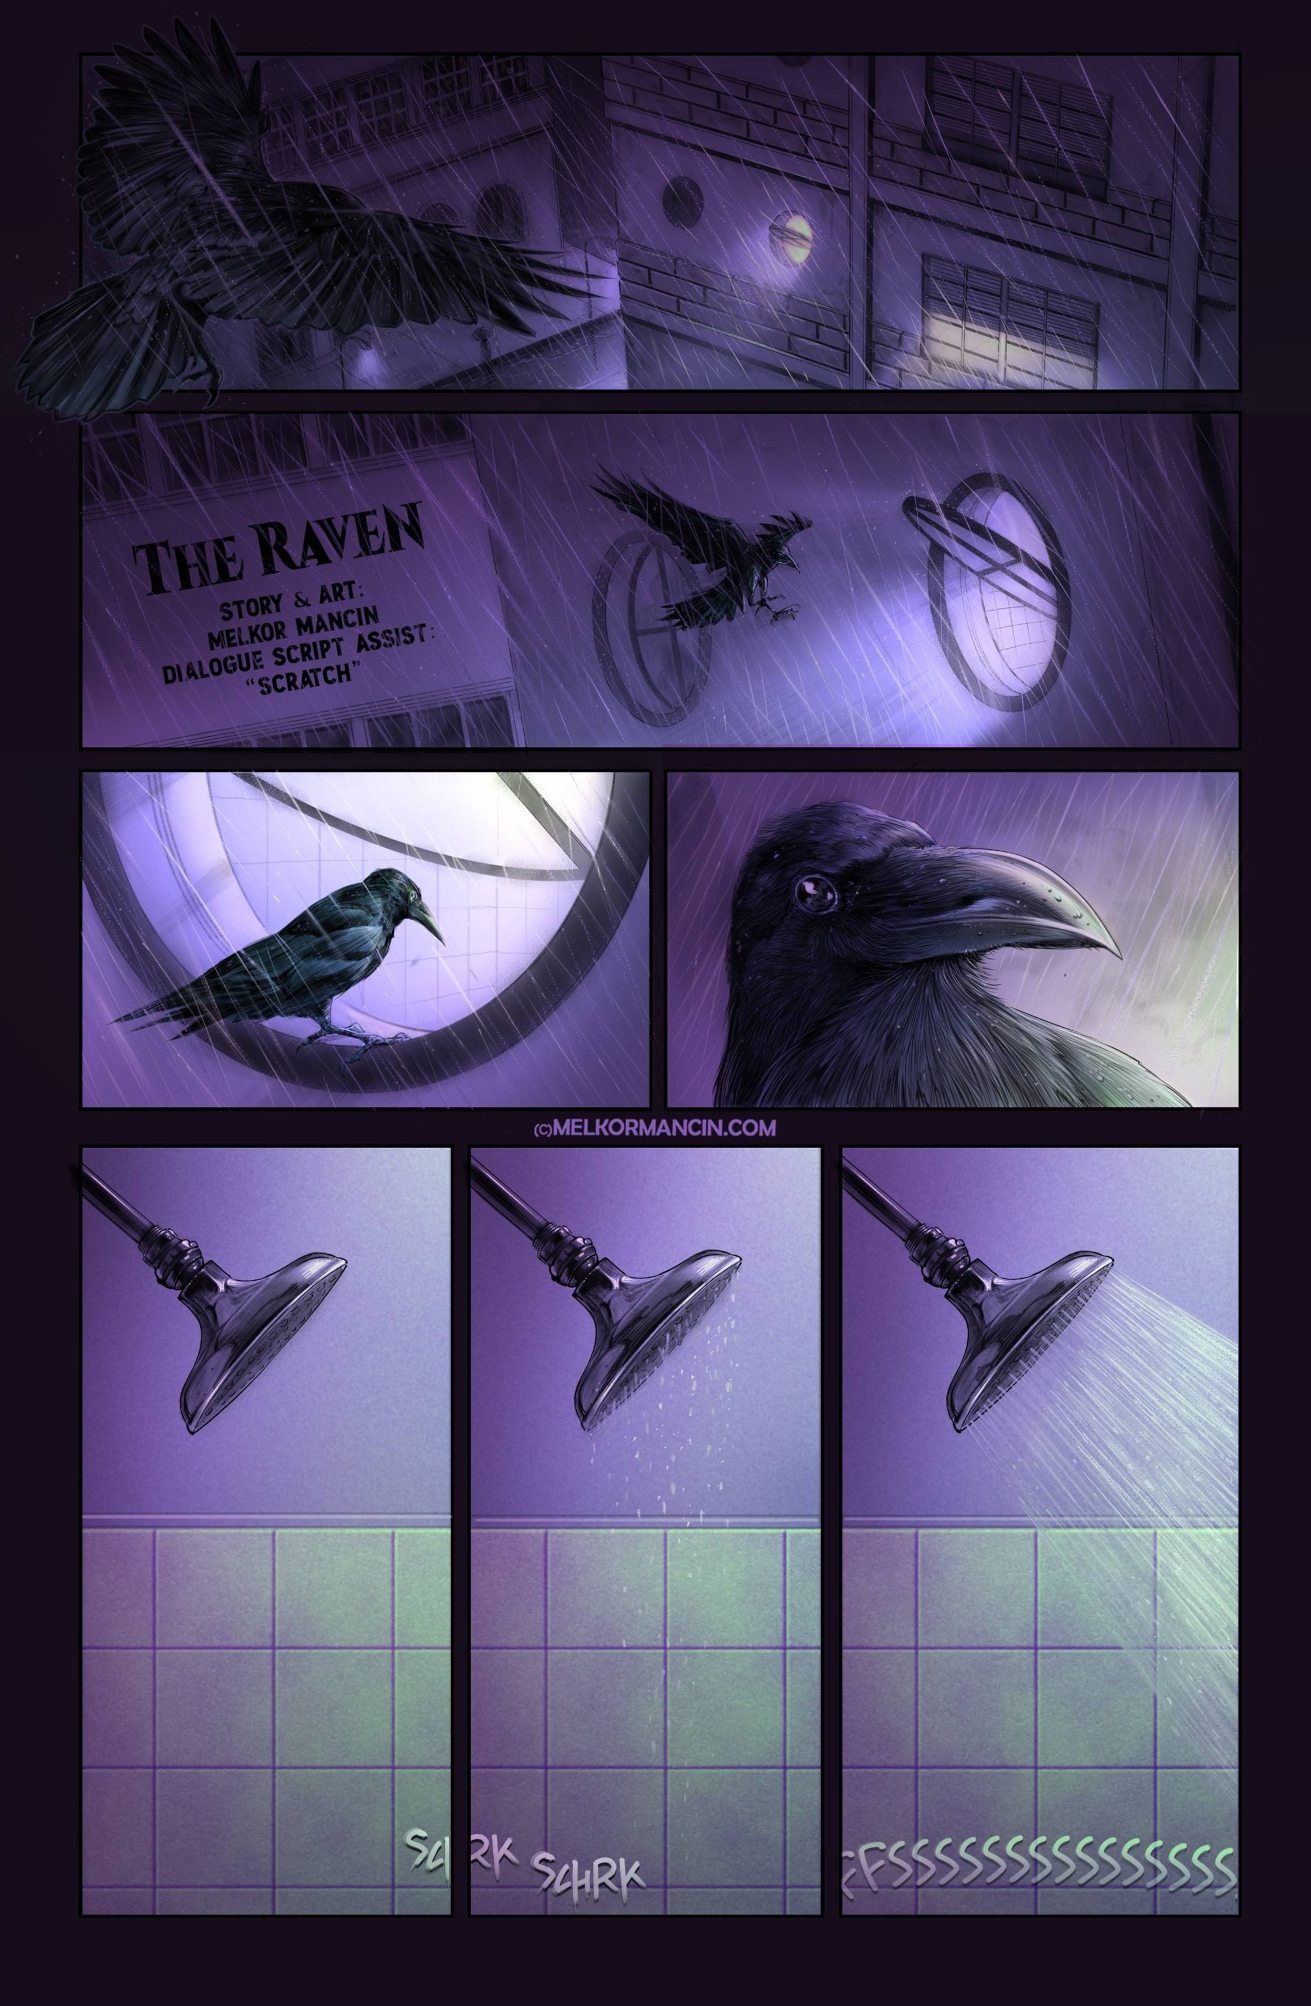 The Raven by Melkor Mancin